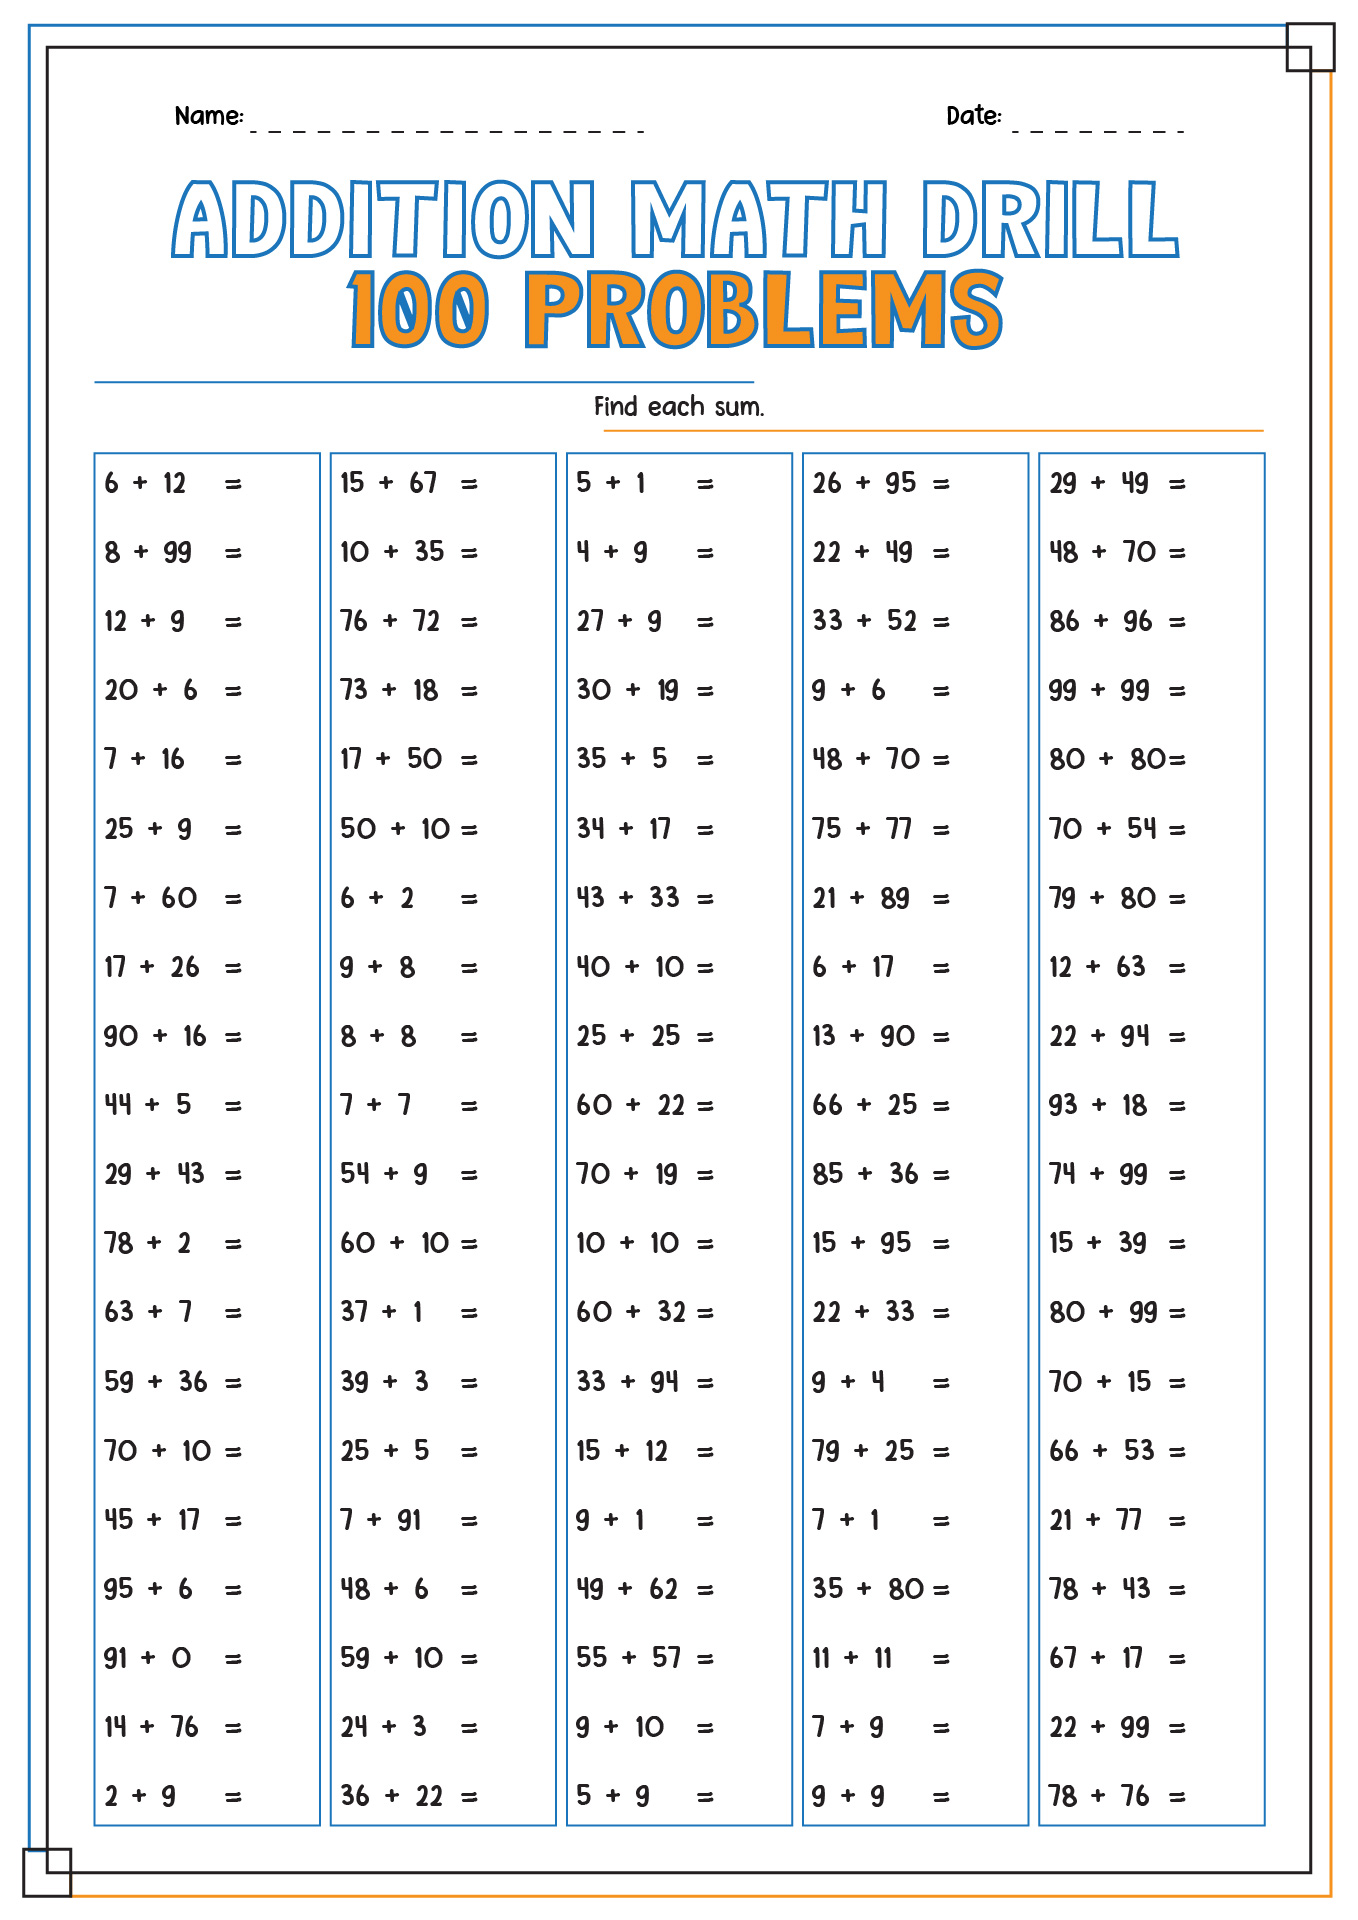 Addition Math Drill 100 Problems Worksheet